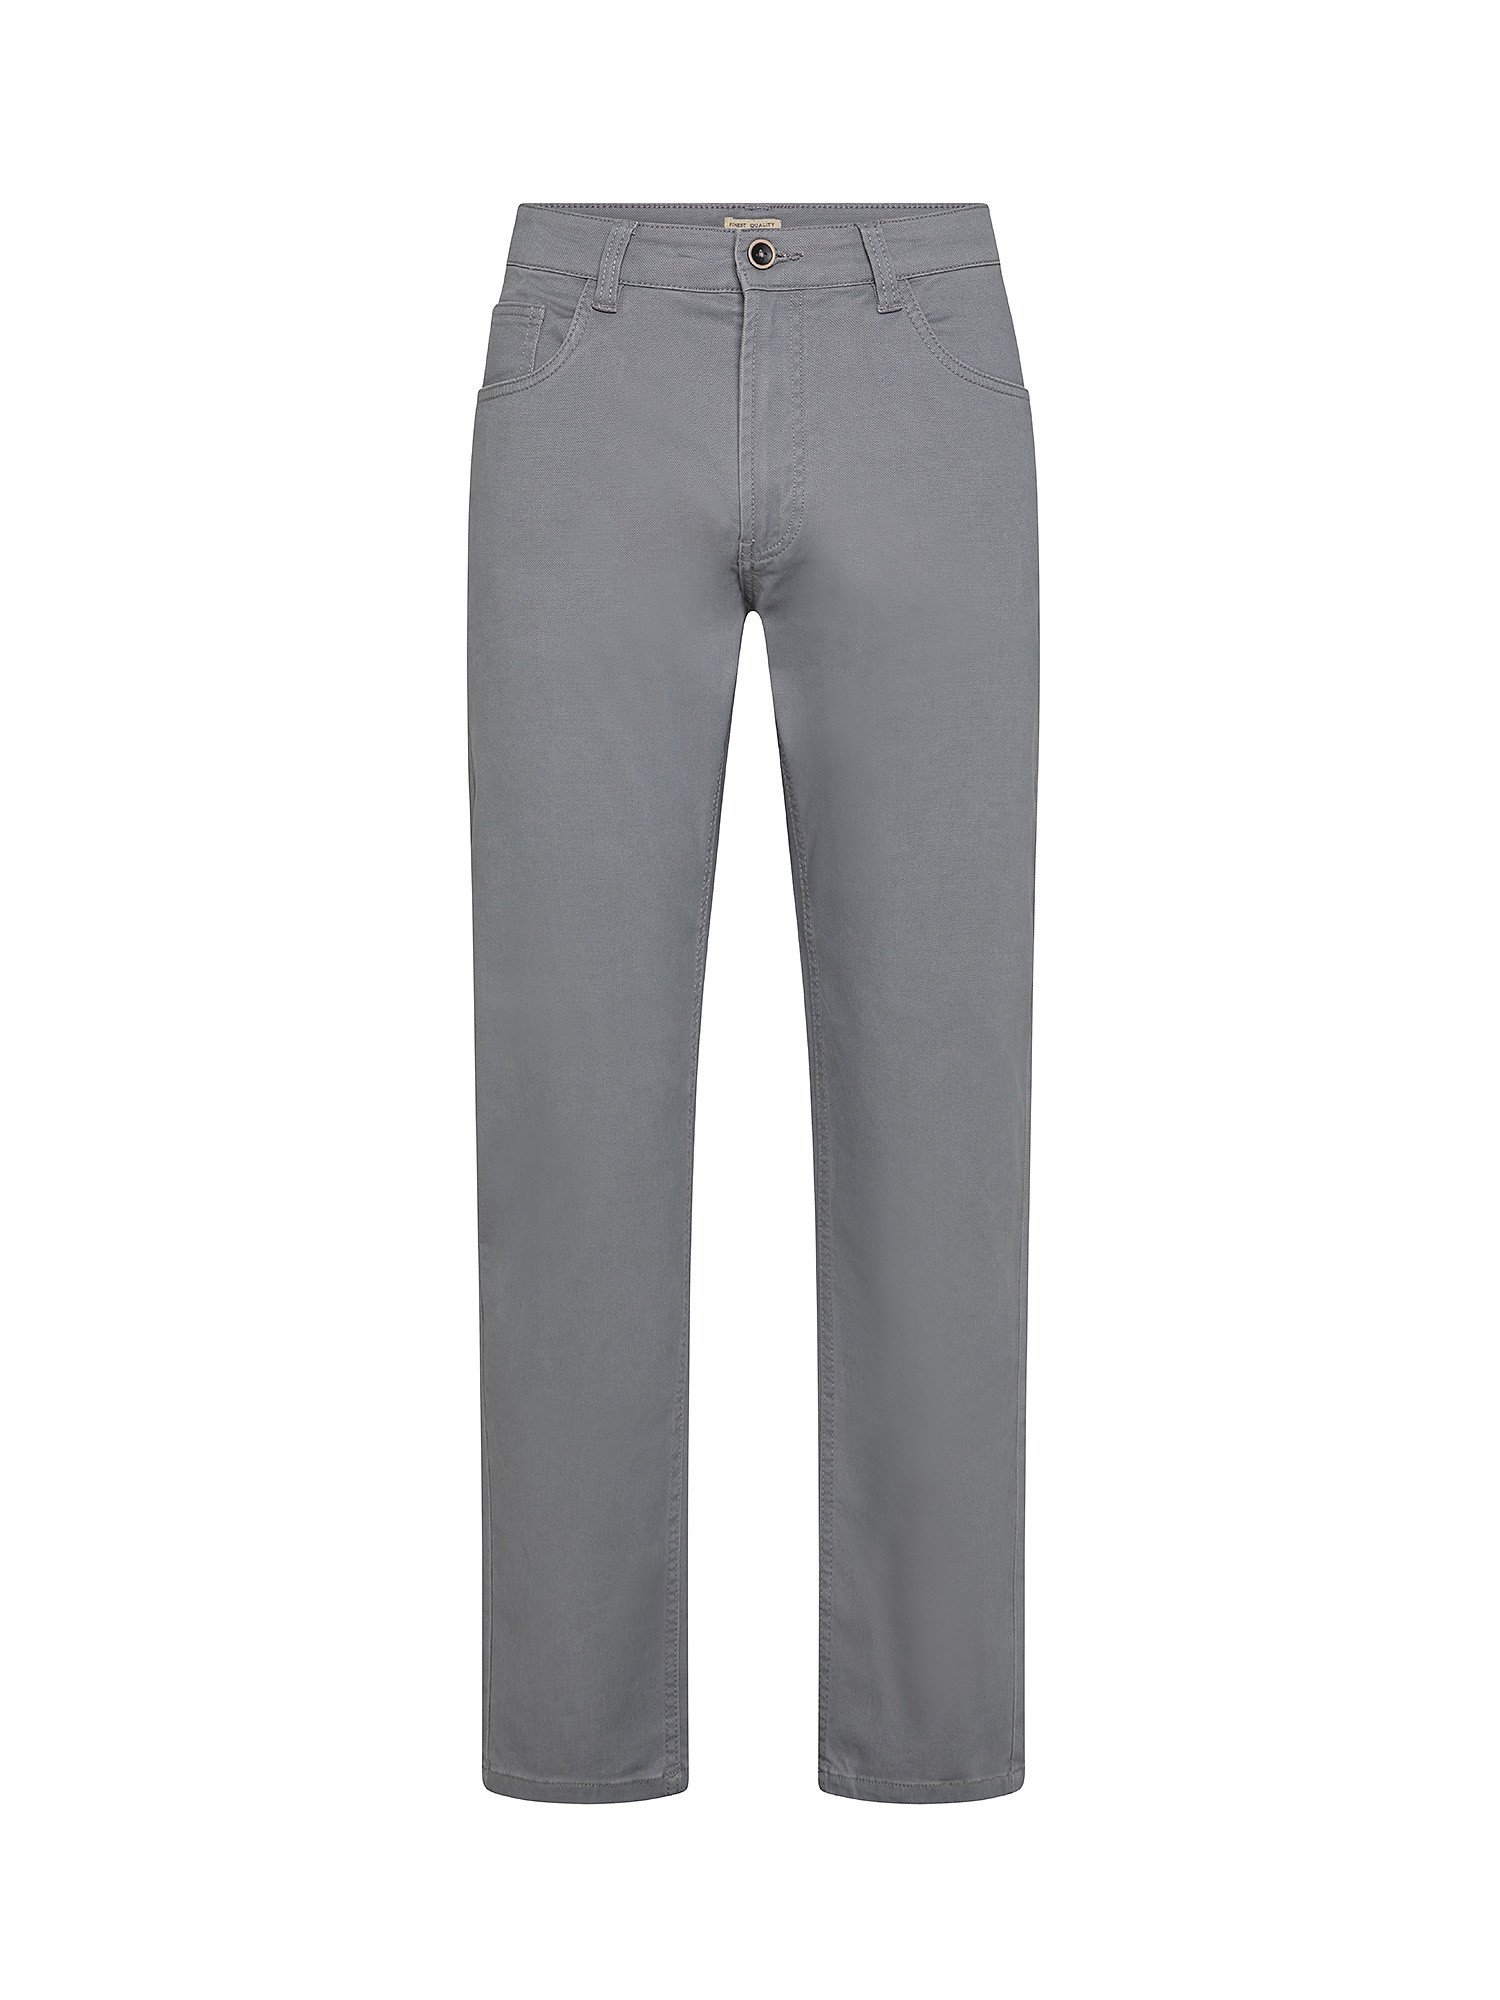 Pantalone cinque tasche slim comfort fit in cotone elasticizzato, Grigio chiaro, large image number 0